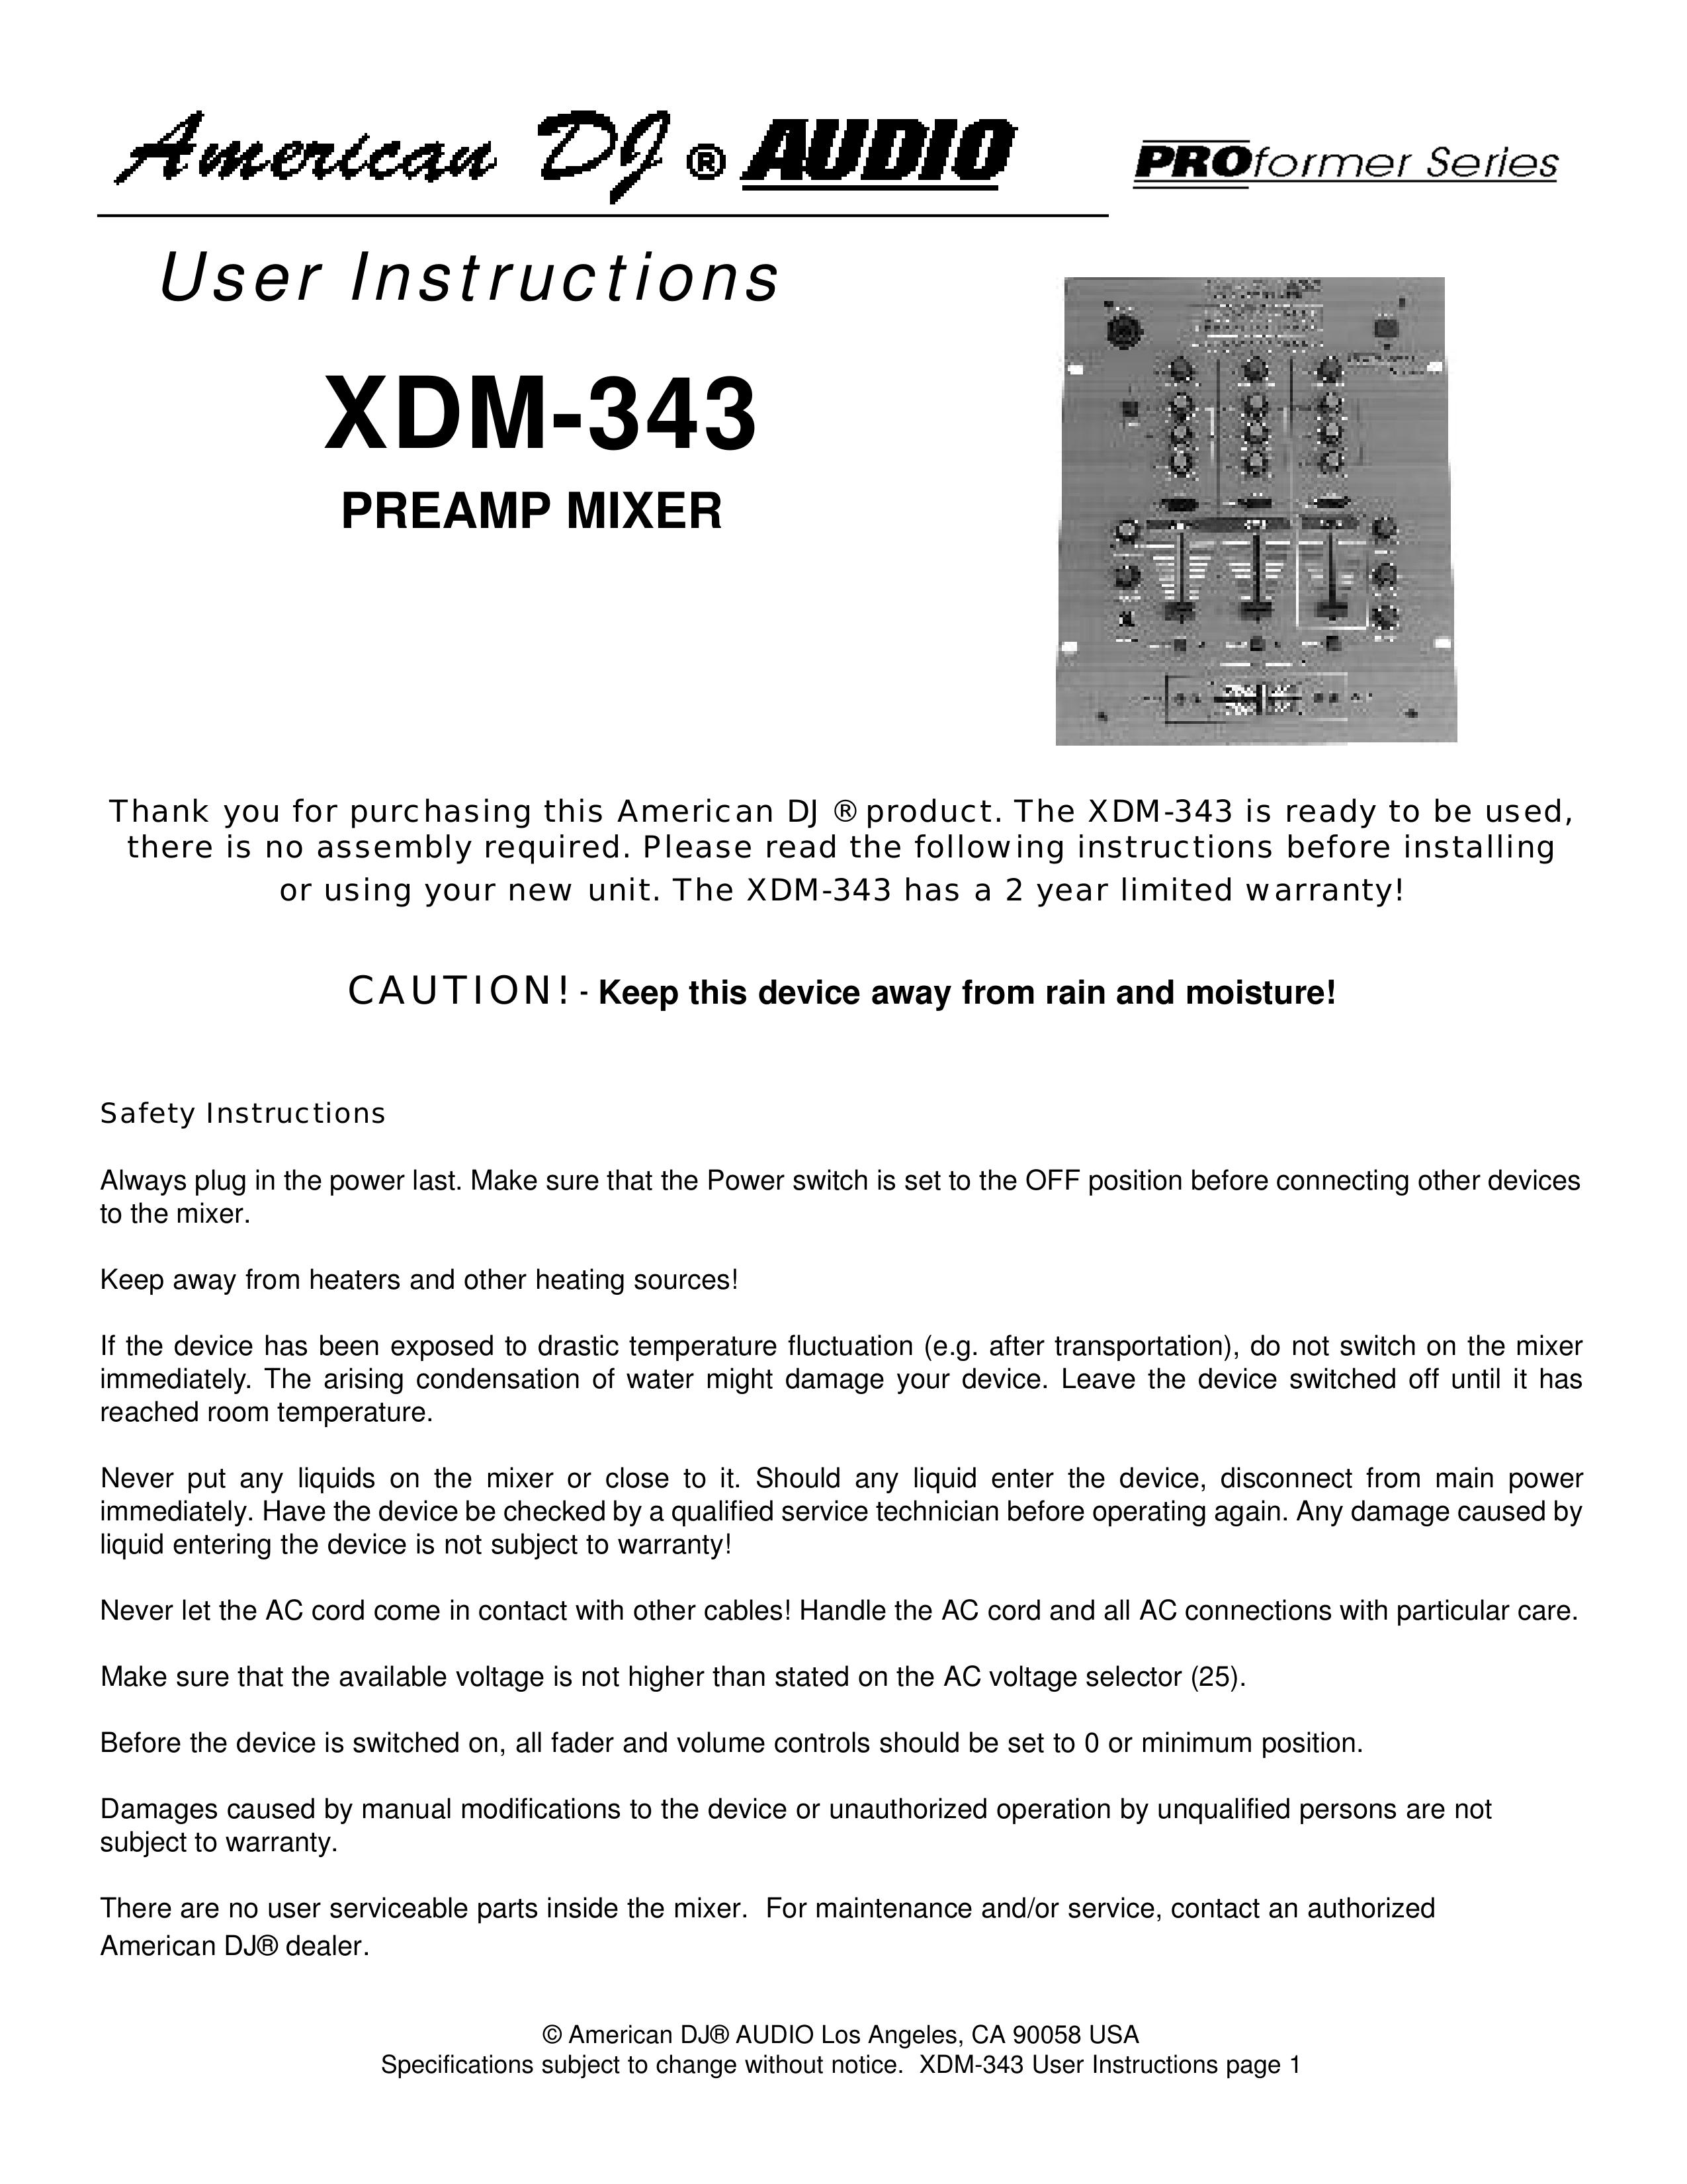 American Audio XDM343 Musical Instrument User Manual